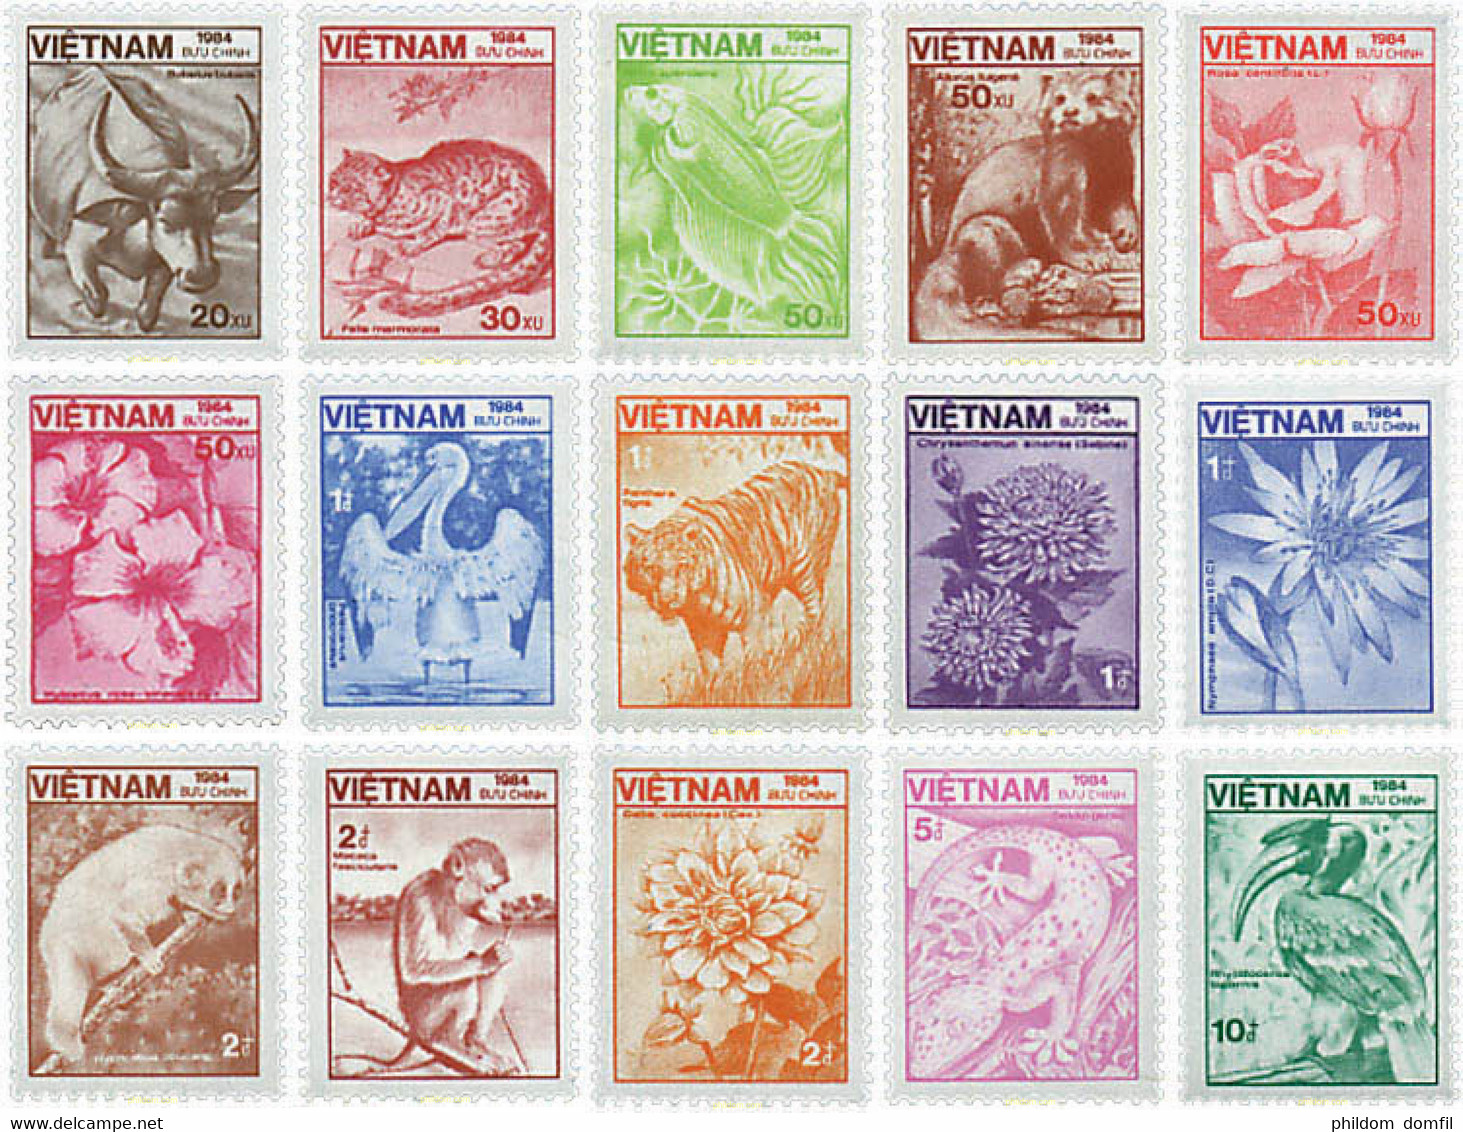 96430 MNH VIETNAM 1984 FAUNA Y FLORA - Chimpanzees